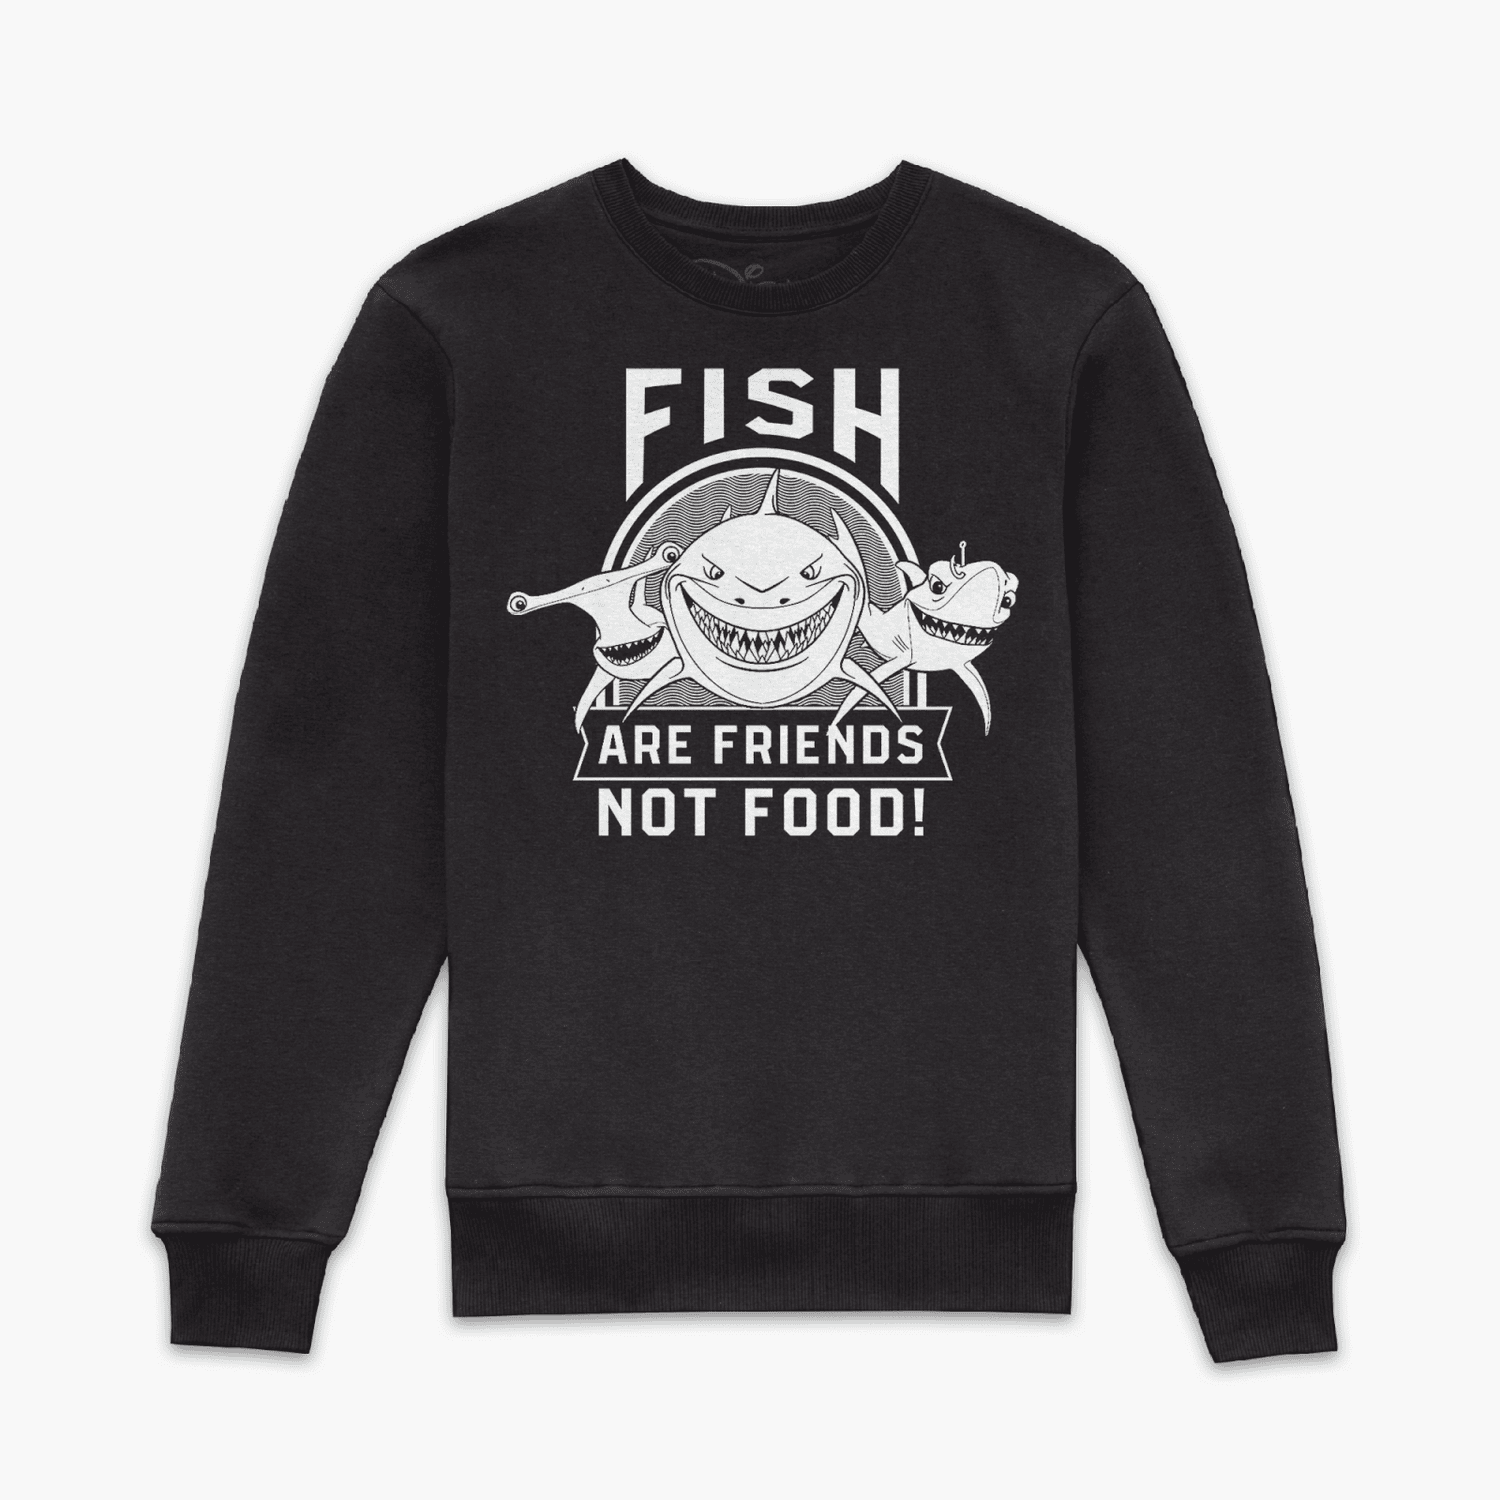 Finding Nemo Fish Are Friends Not Food Sweatshirt - Black